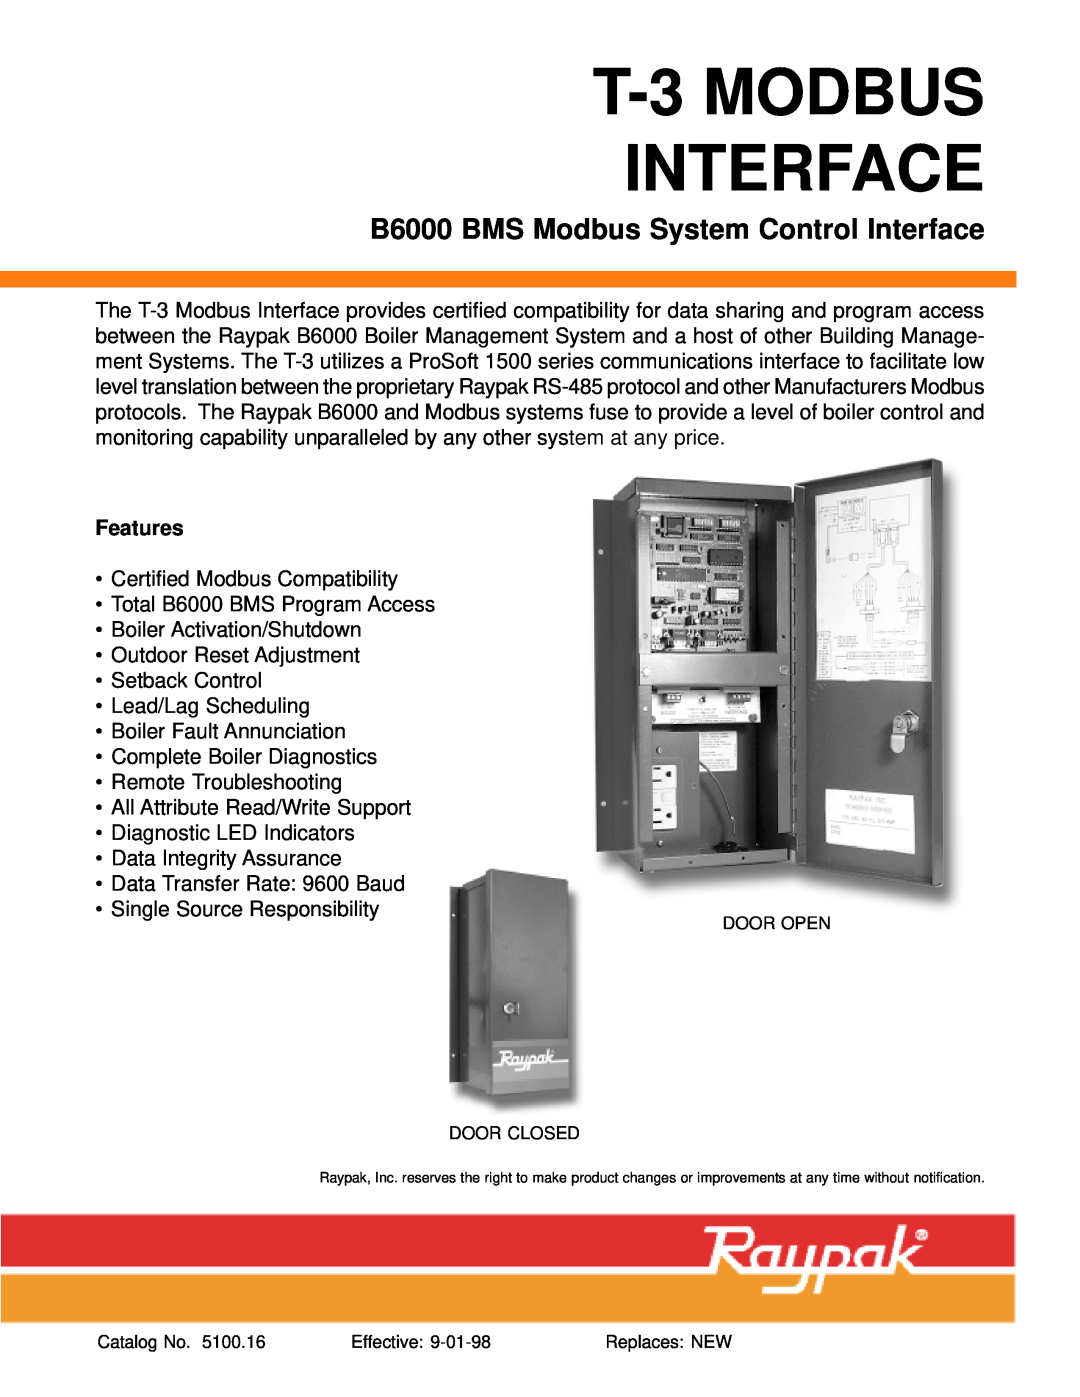 Raypak manual Features, T-3 MODBUS INTERFACE, B6000 BMS Modbus System Control Interface 